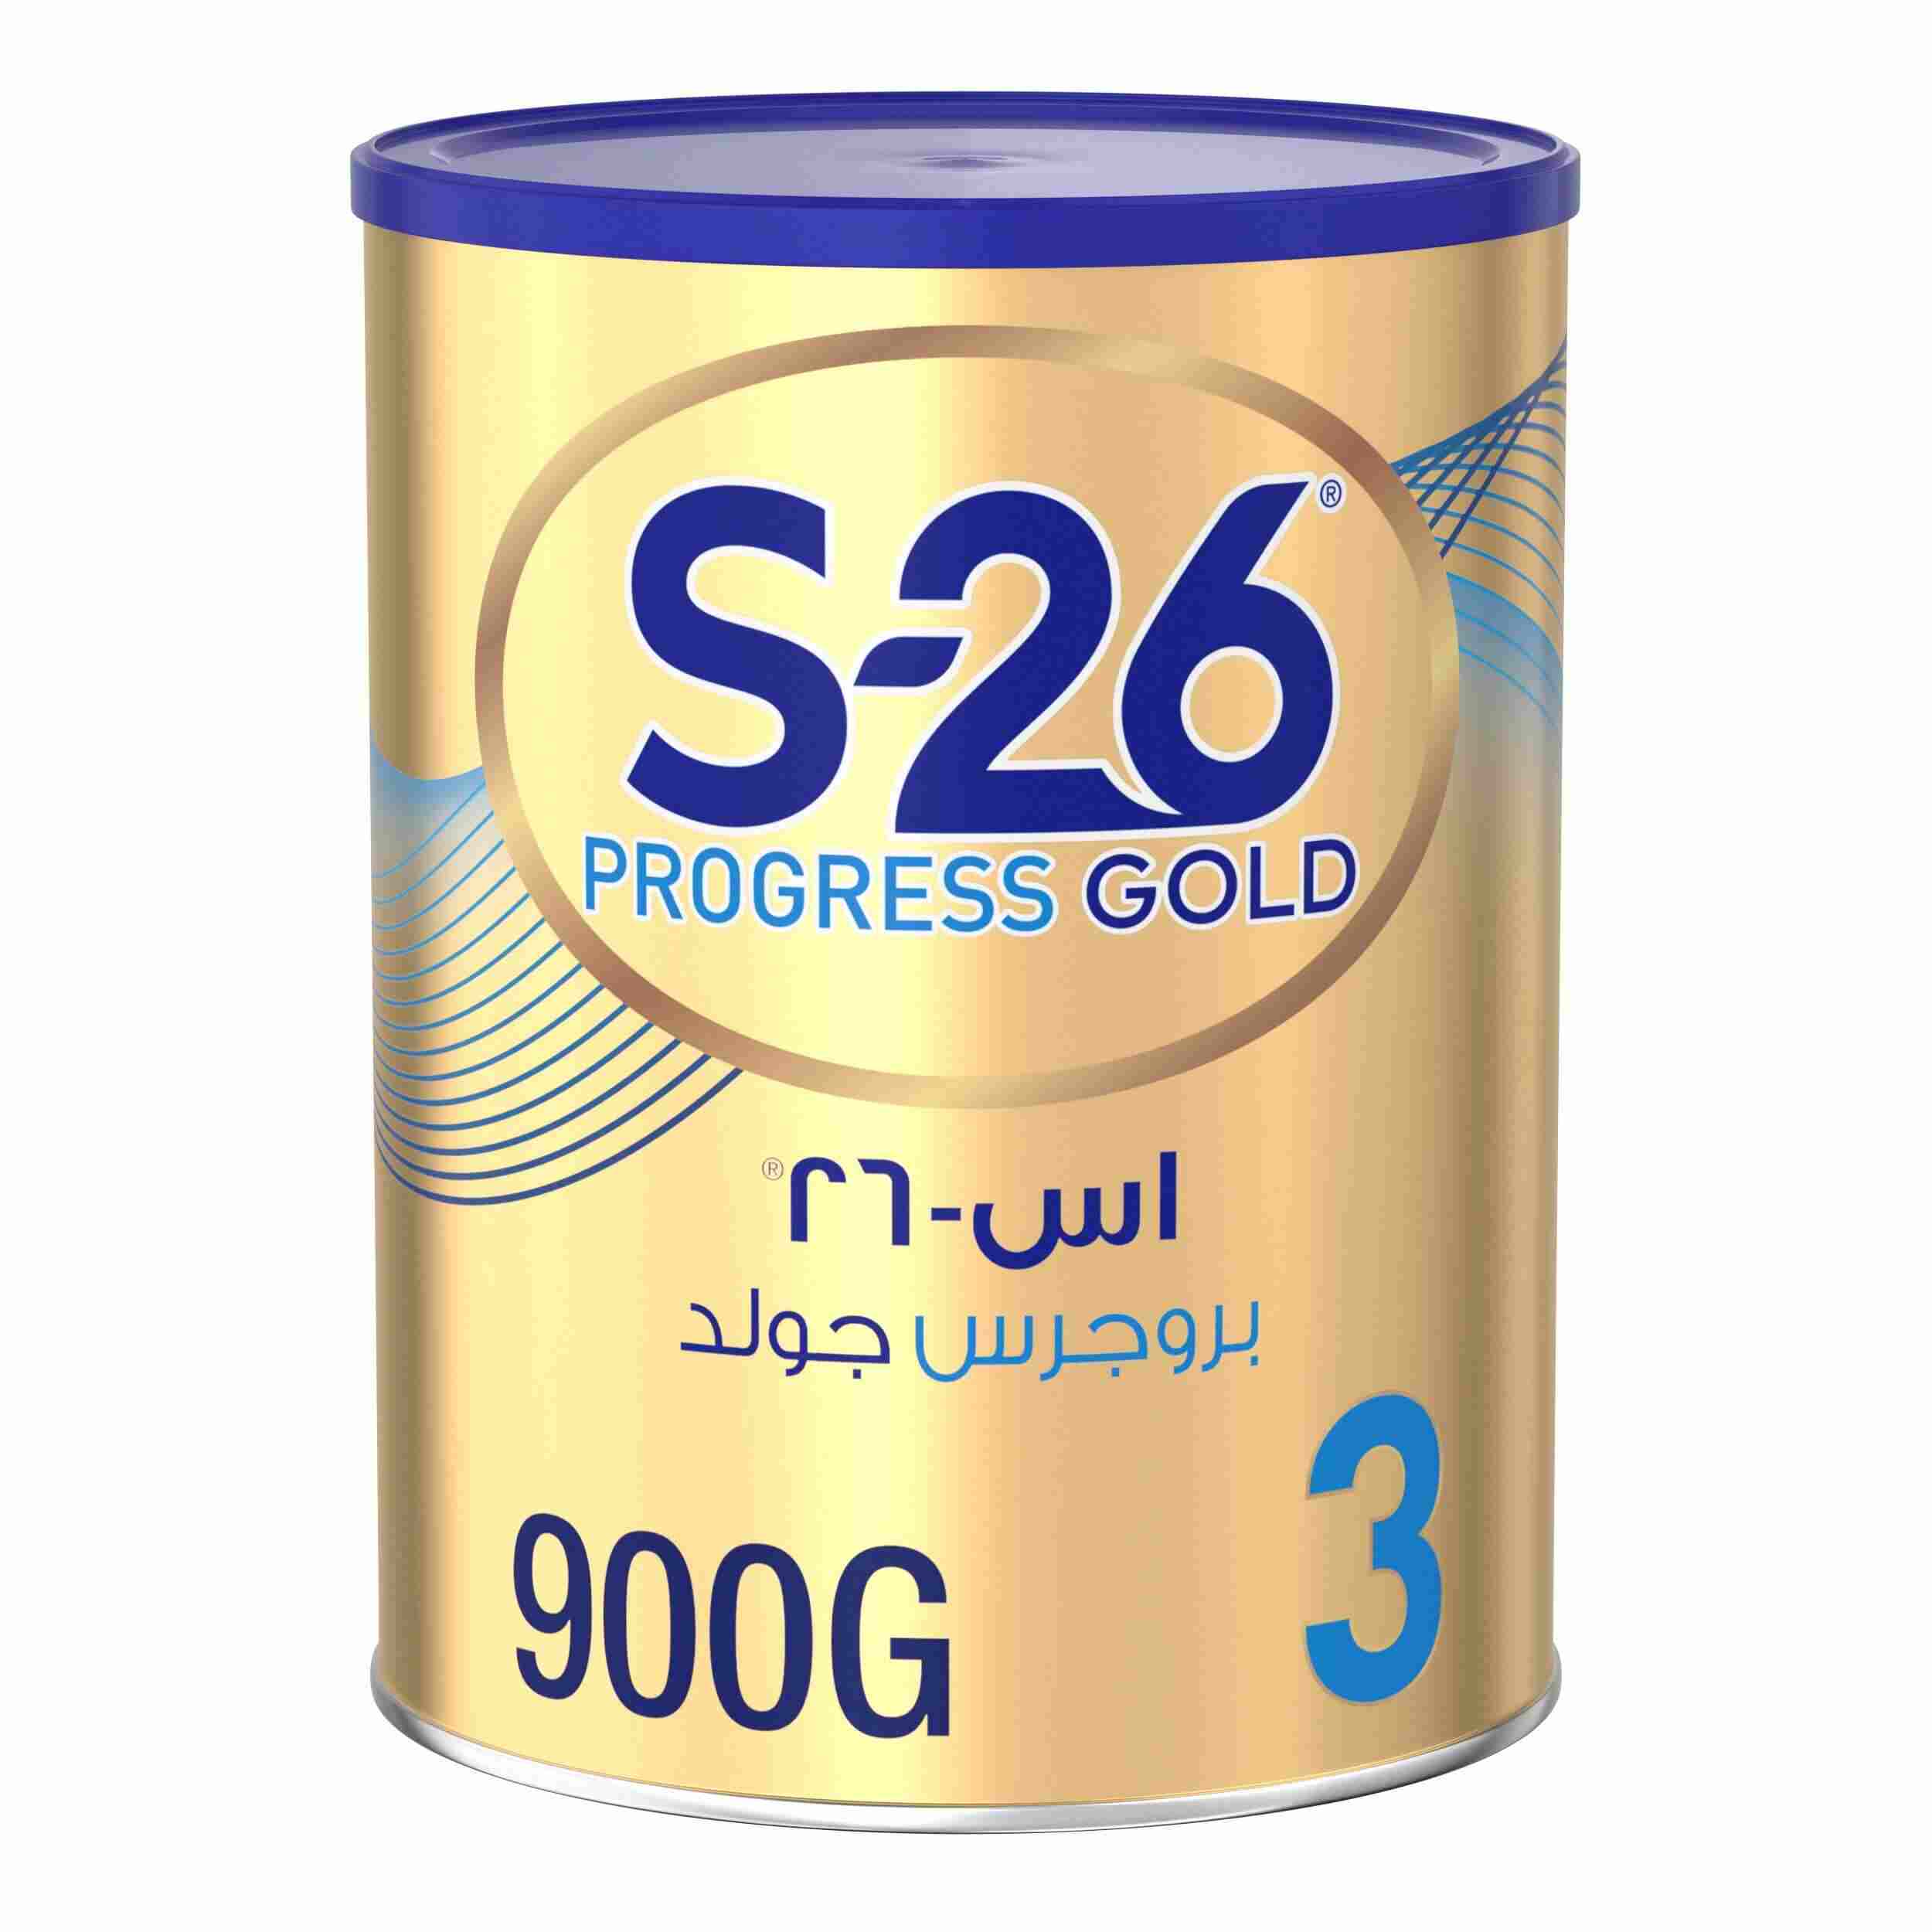 S-26 Progress Gold No 3 | 900G